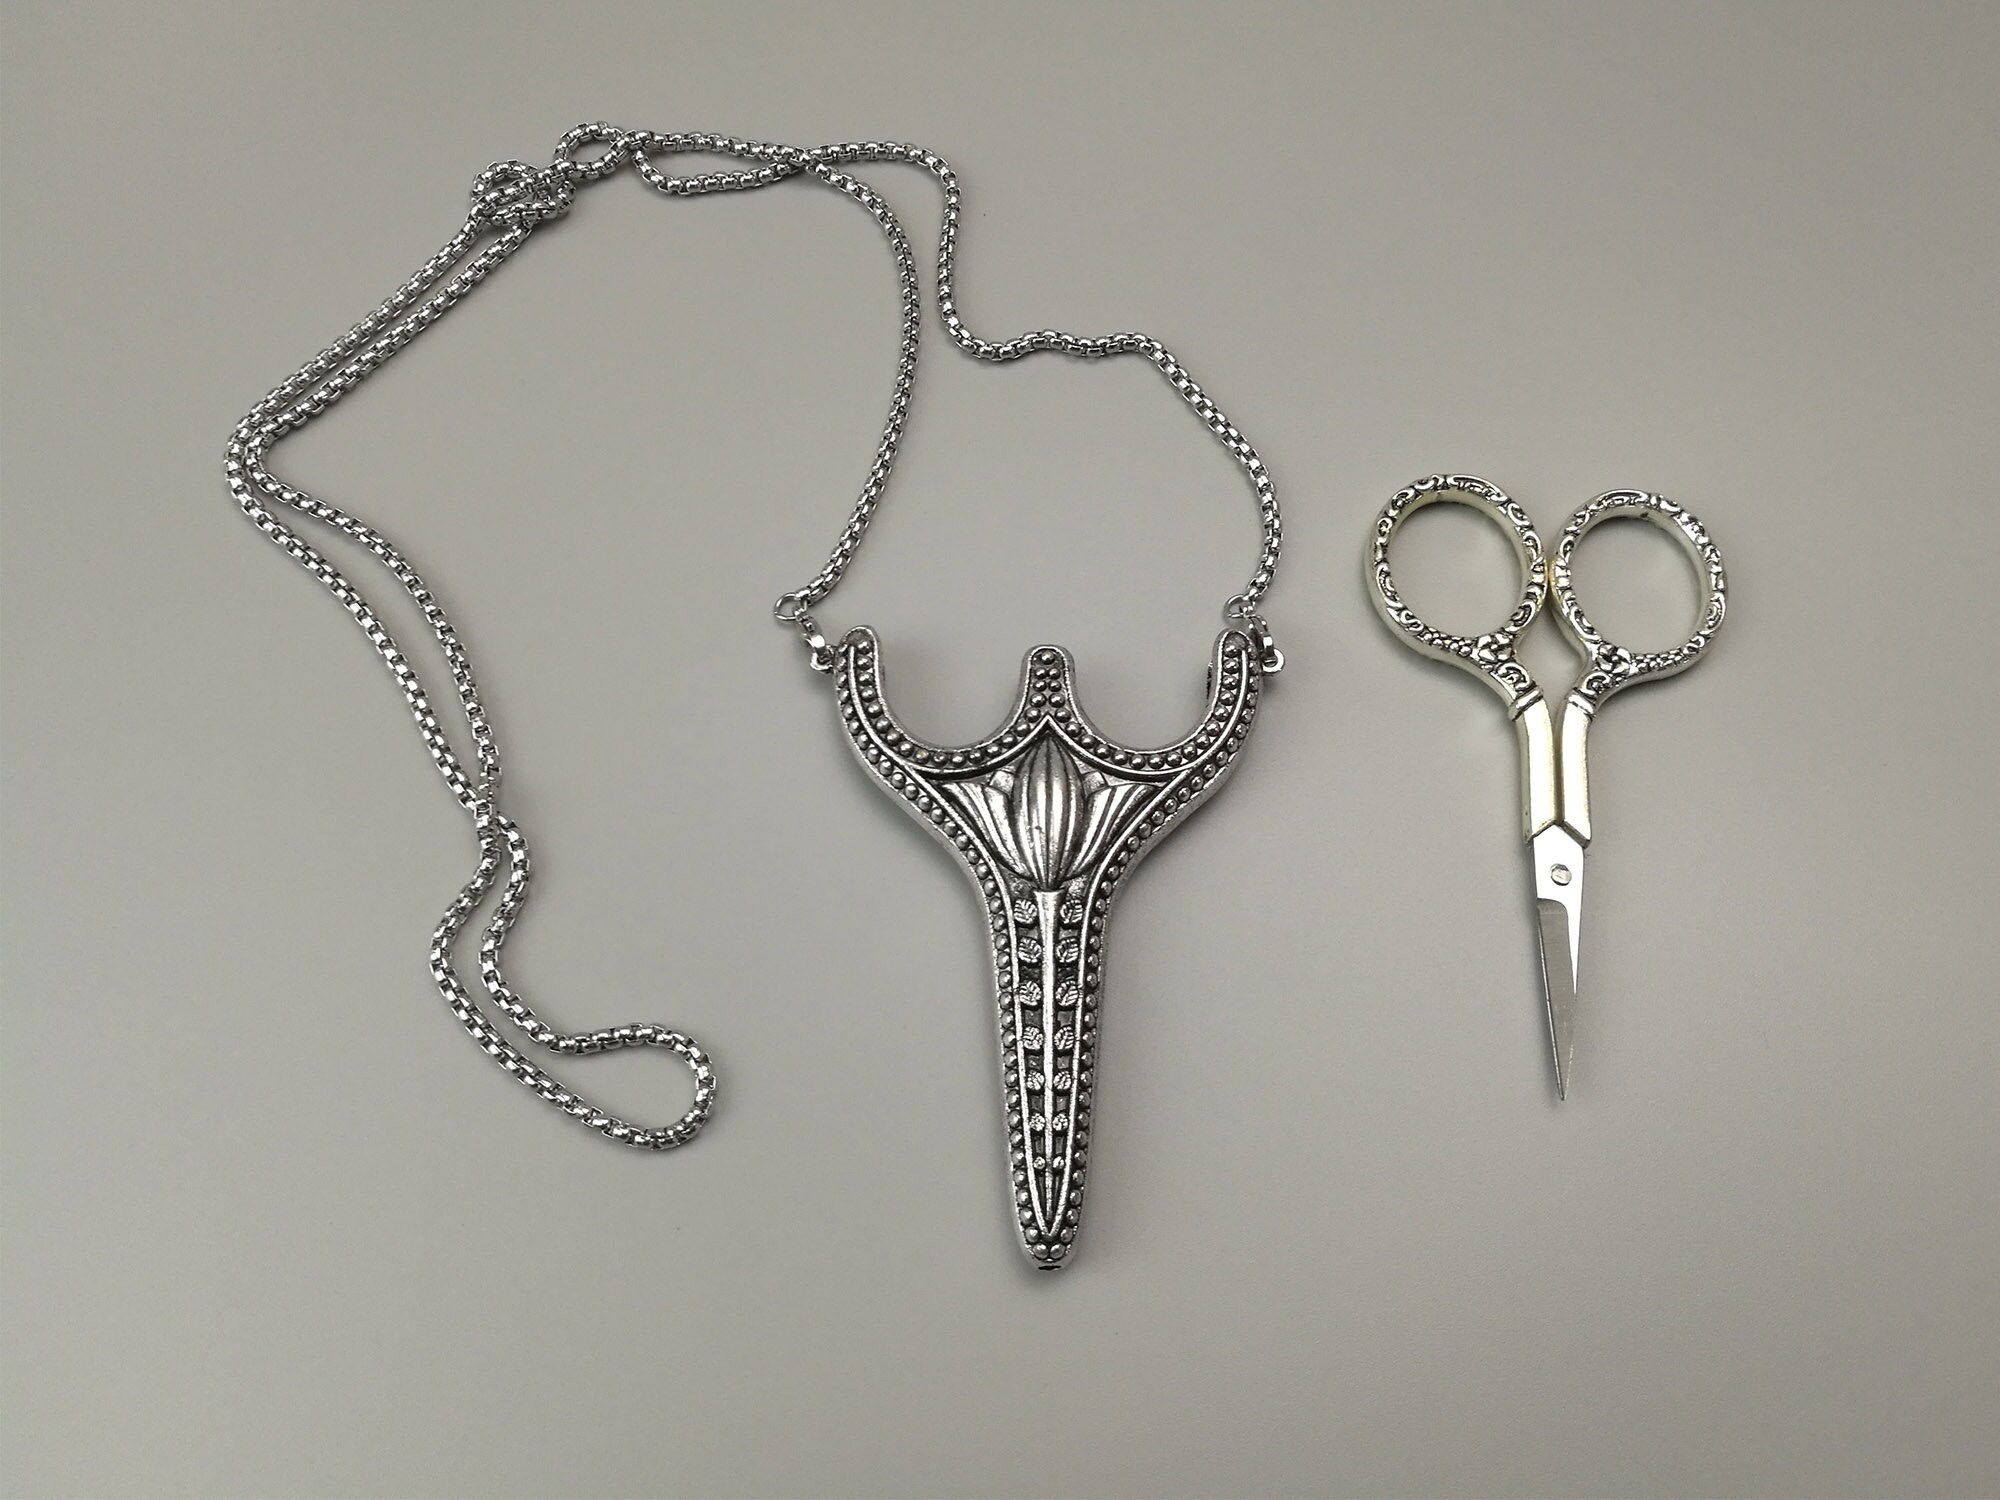 Vintage Tulip Scissors,craft scissor necklace,embroidery scissors, craft scissors ,Christmas gift ideas ,gifts for her